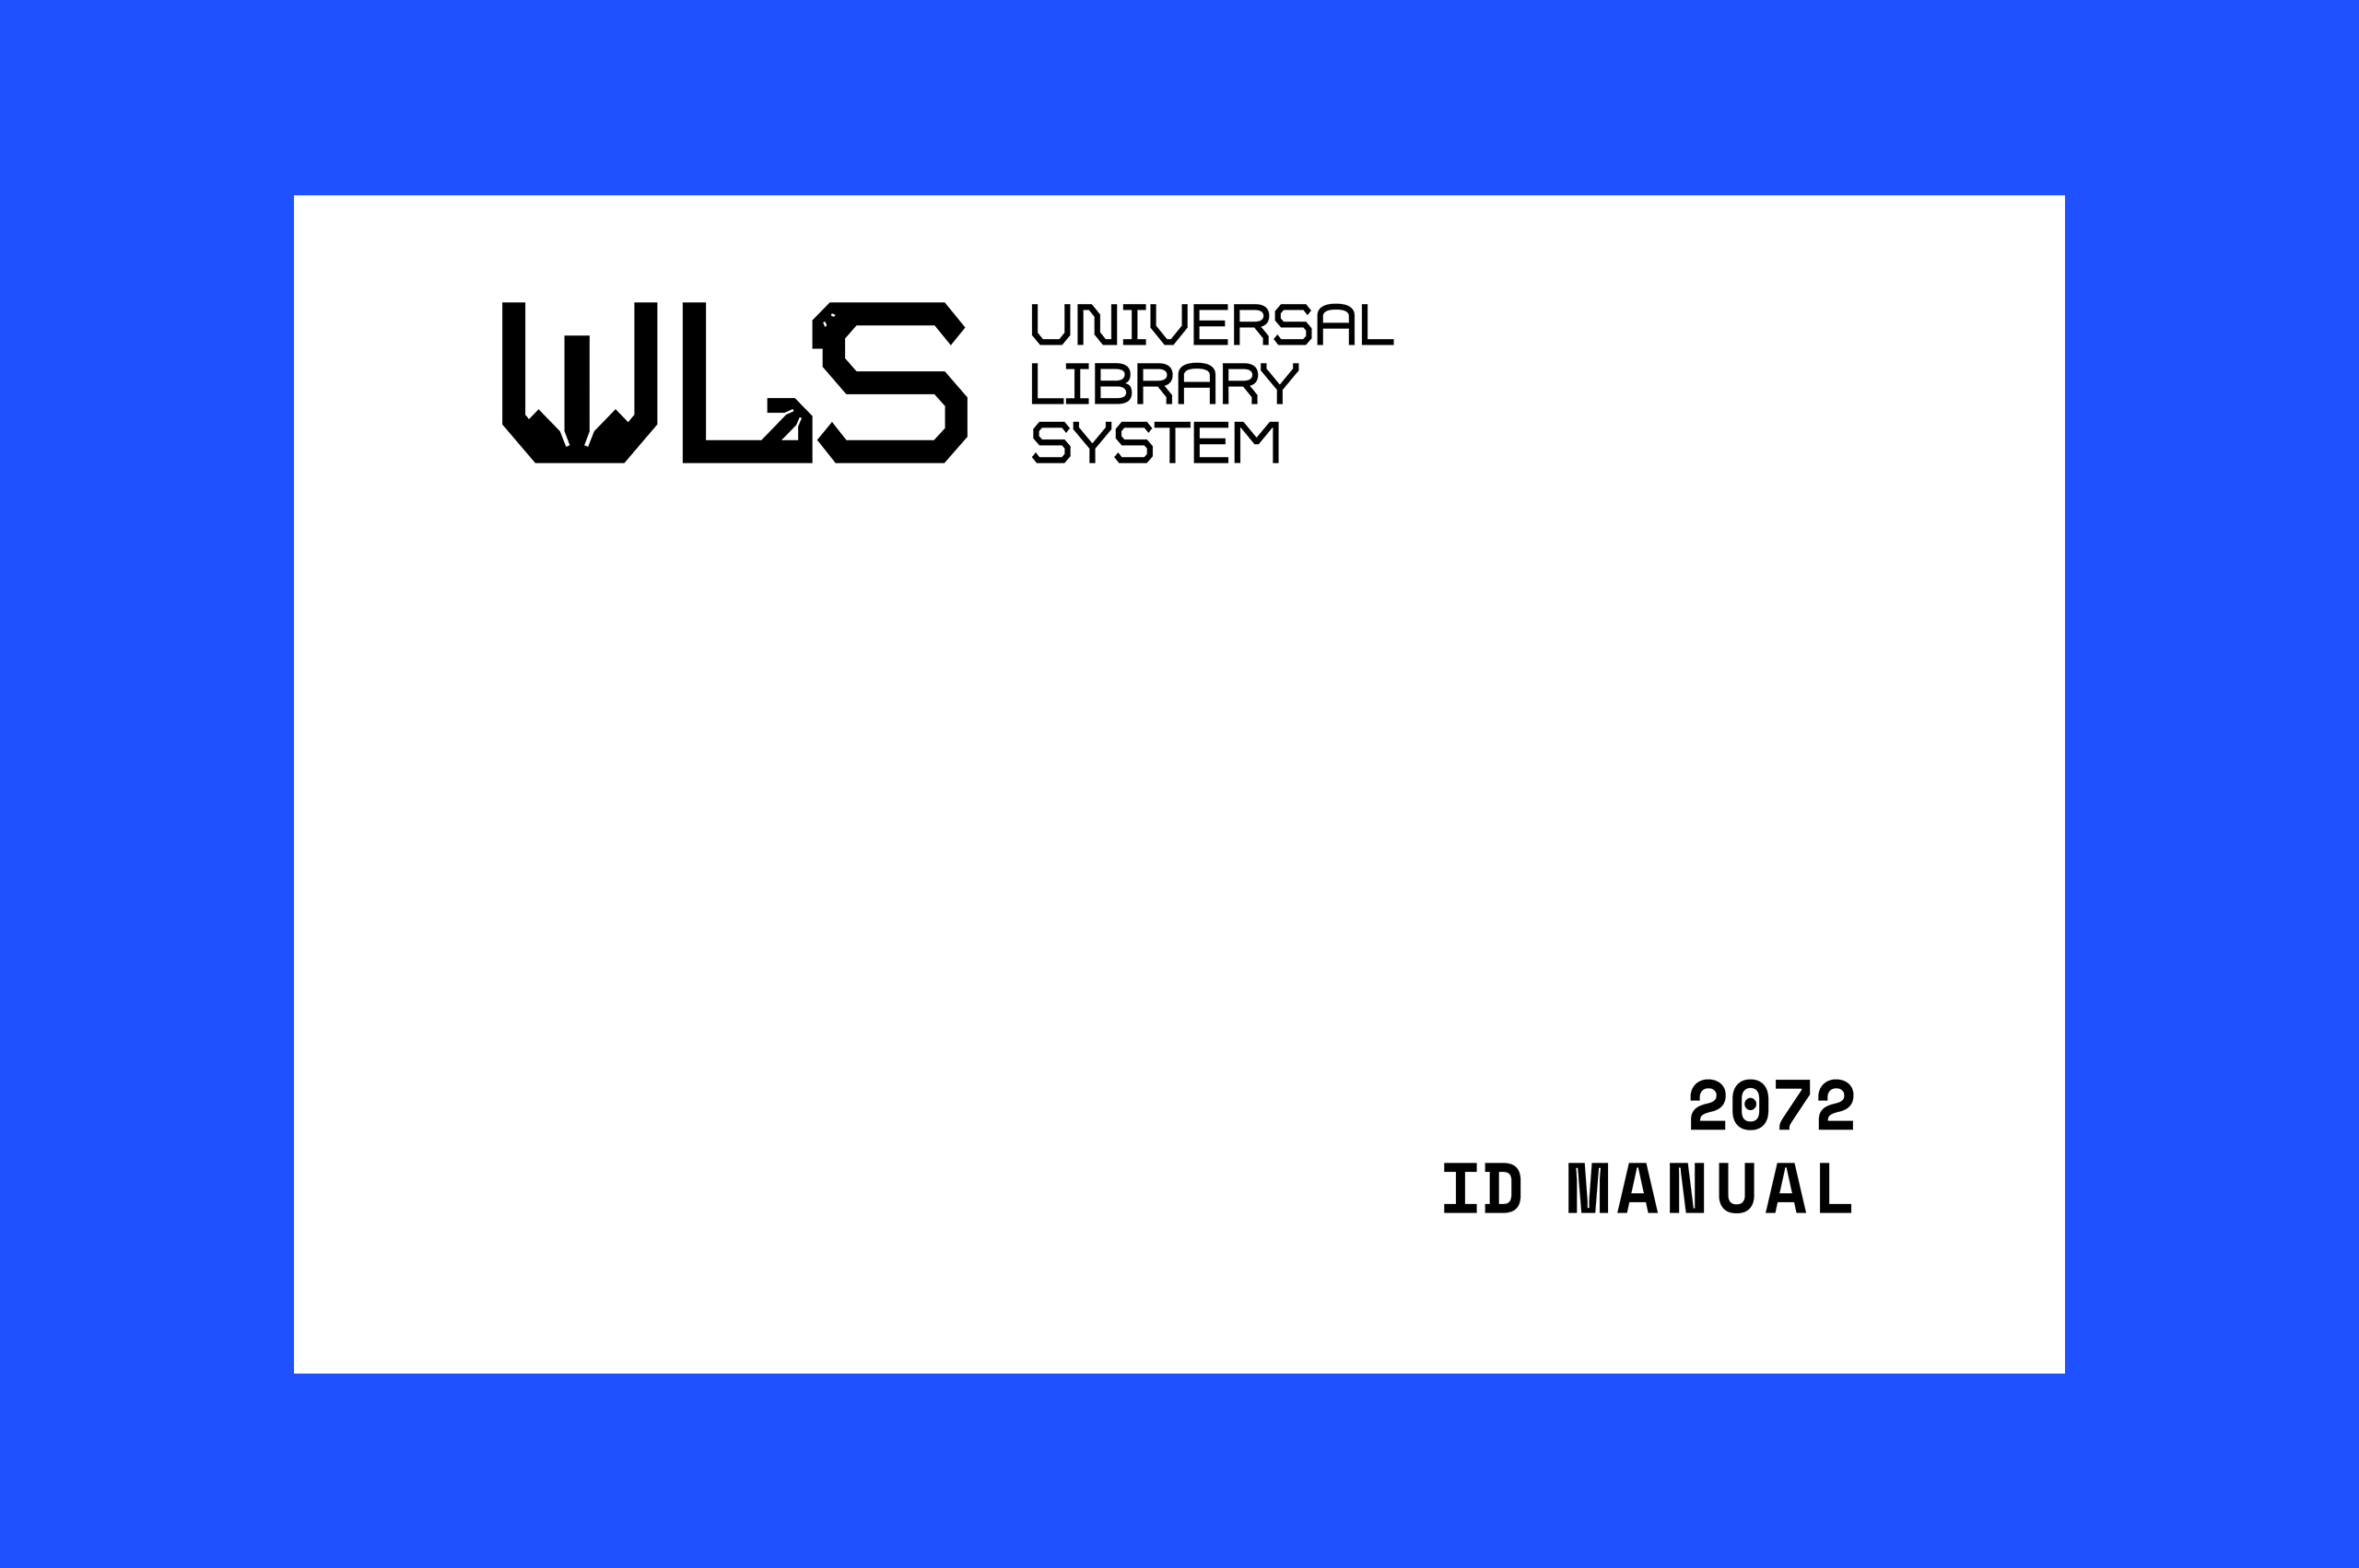 W-ULS-MF-1